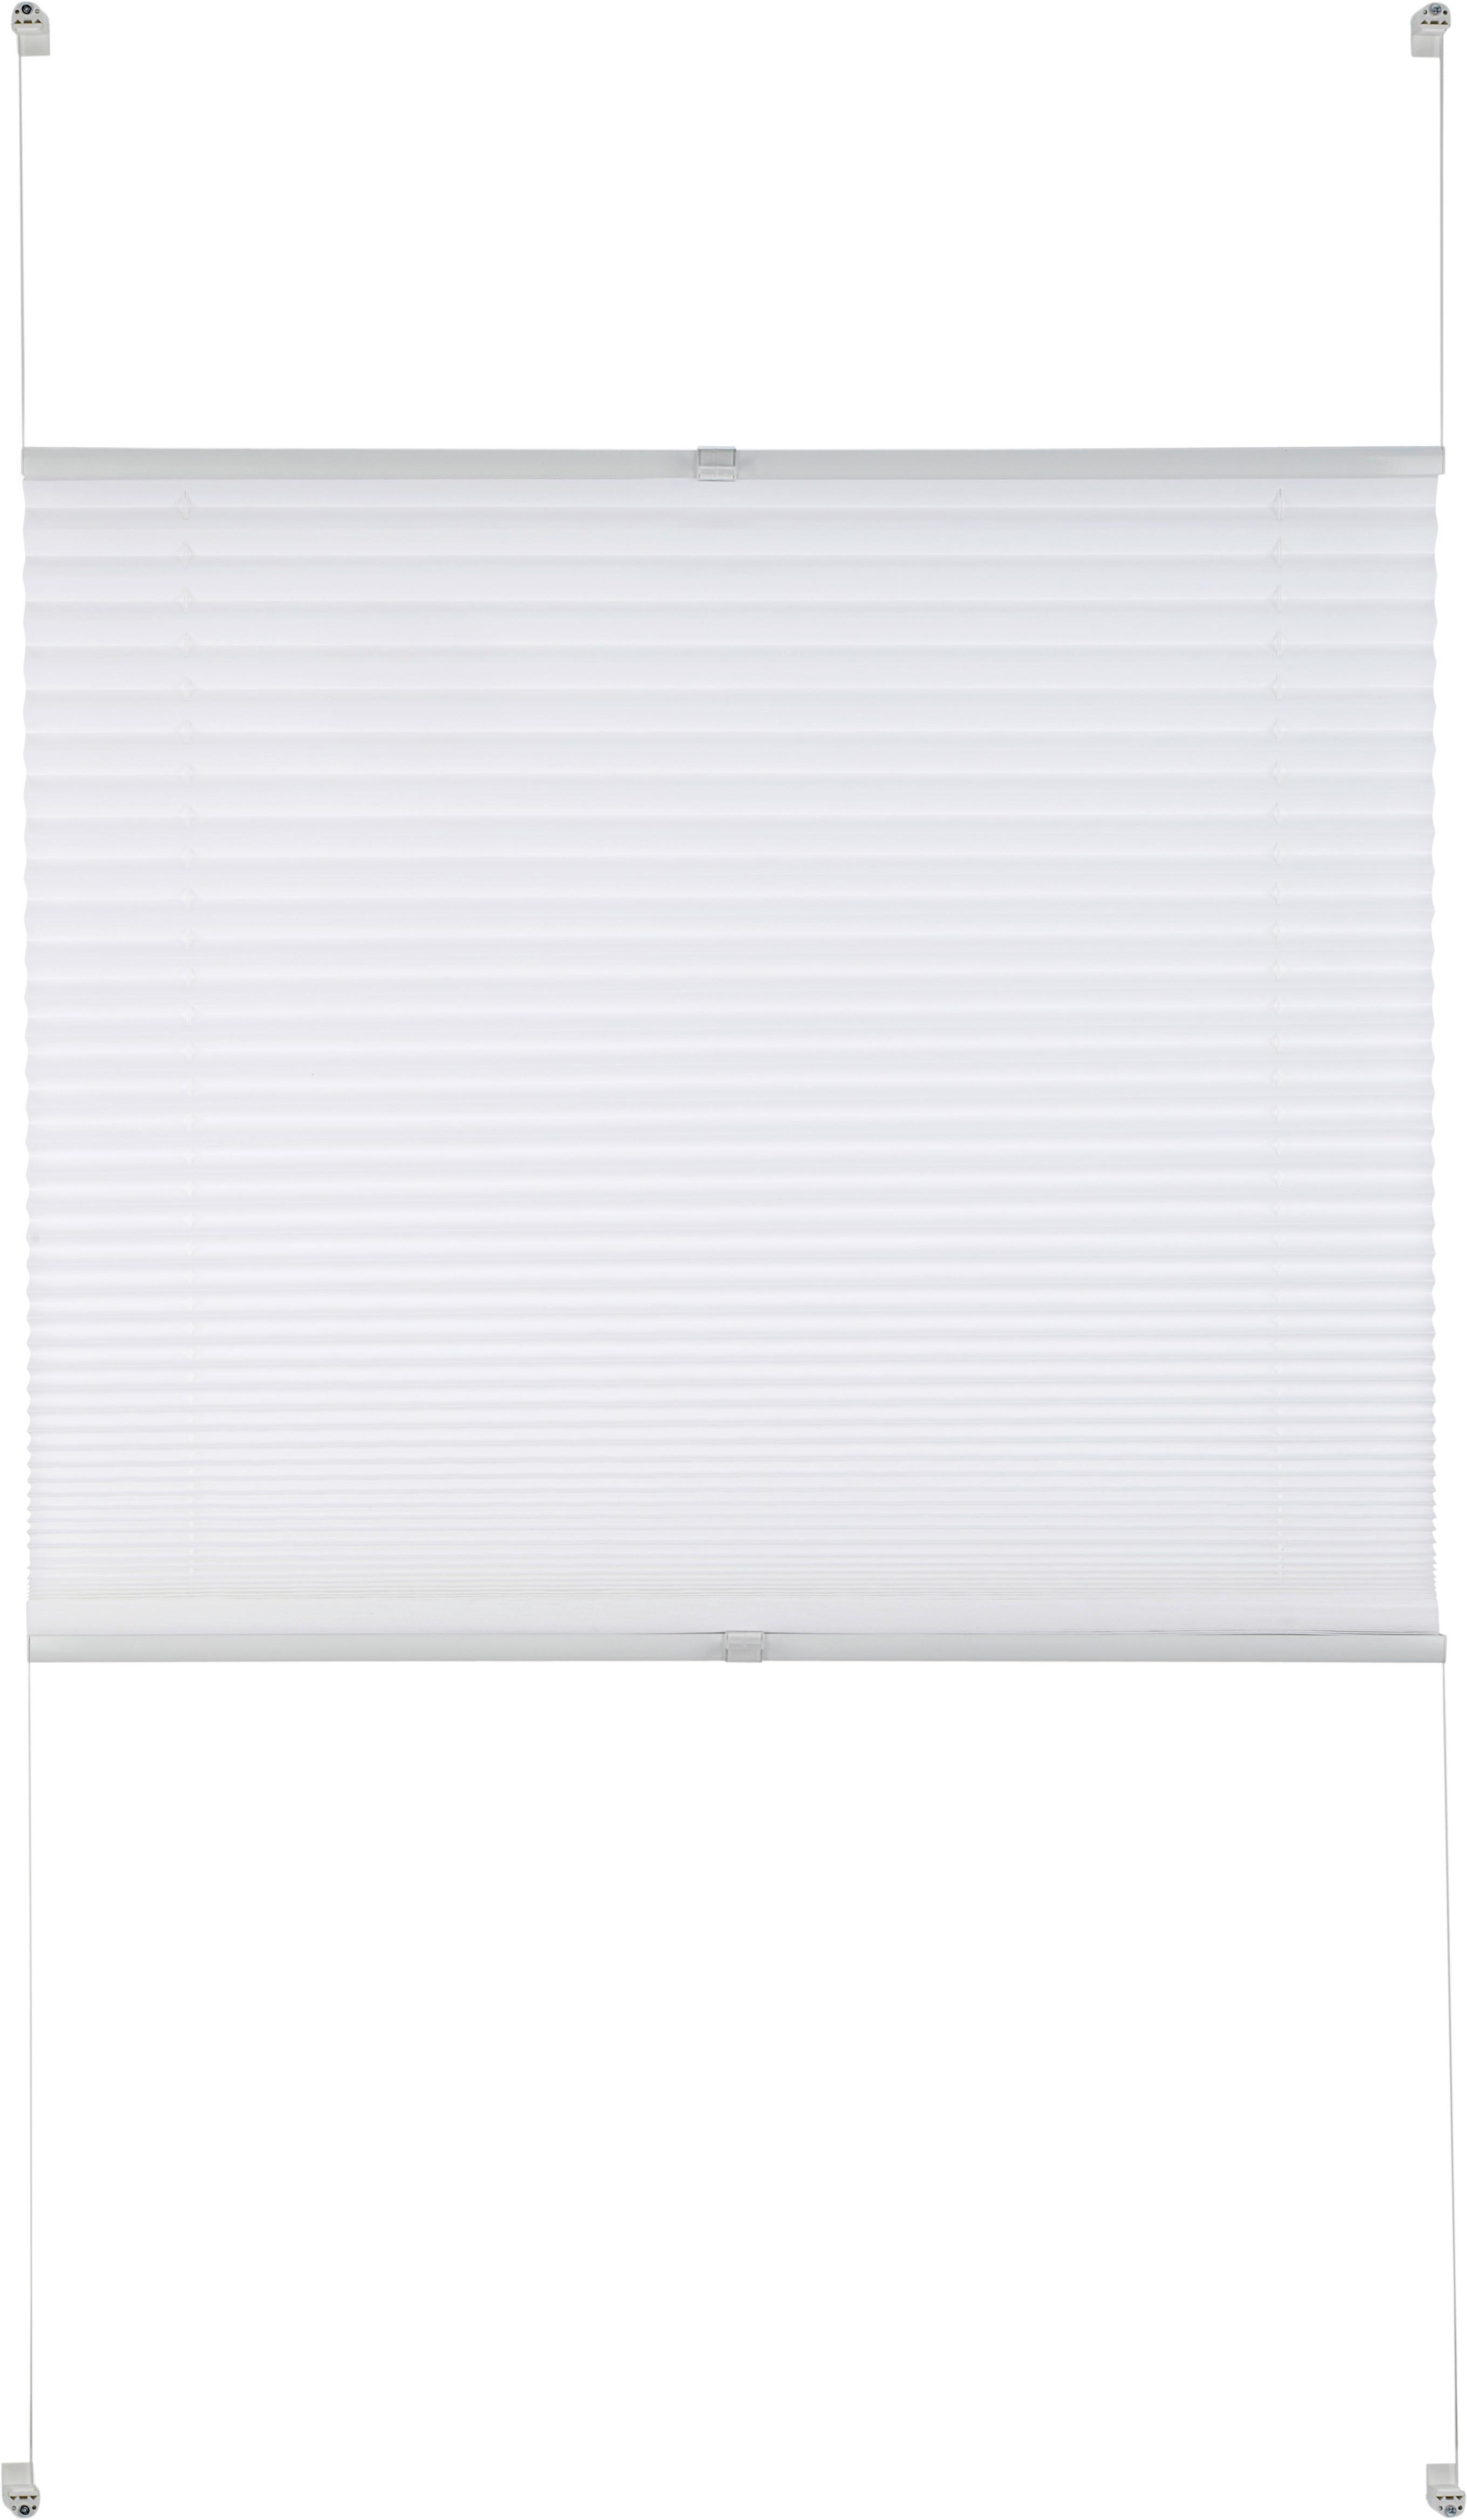 Plissee Light in Weiss ca. 50x130cm - Weiss, Textil (50/130cm) - Premium Living